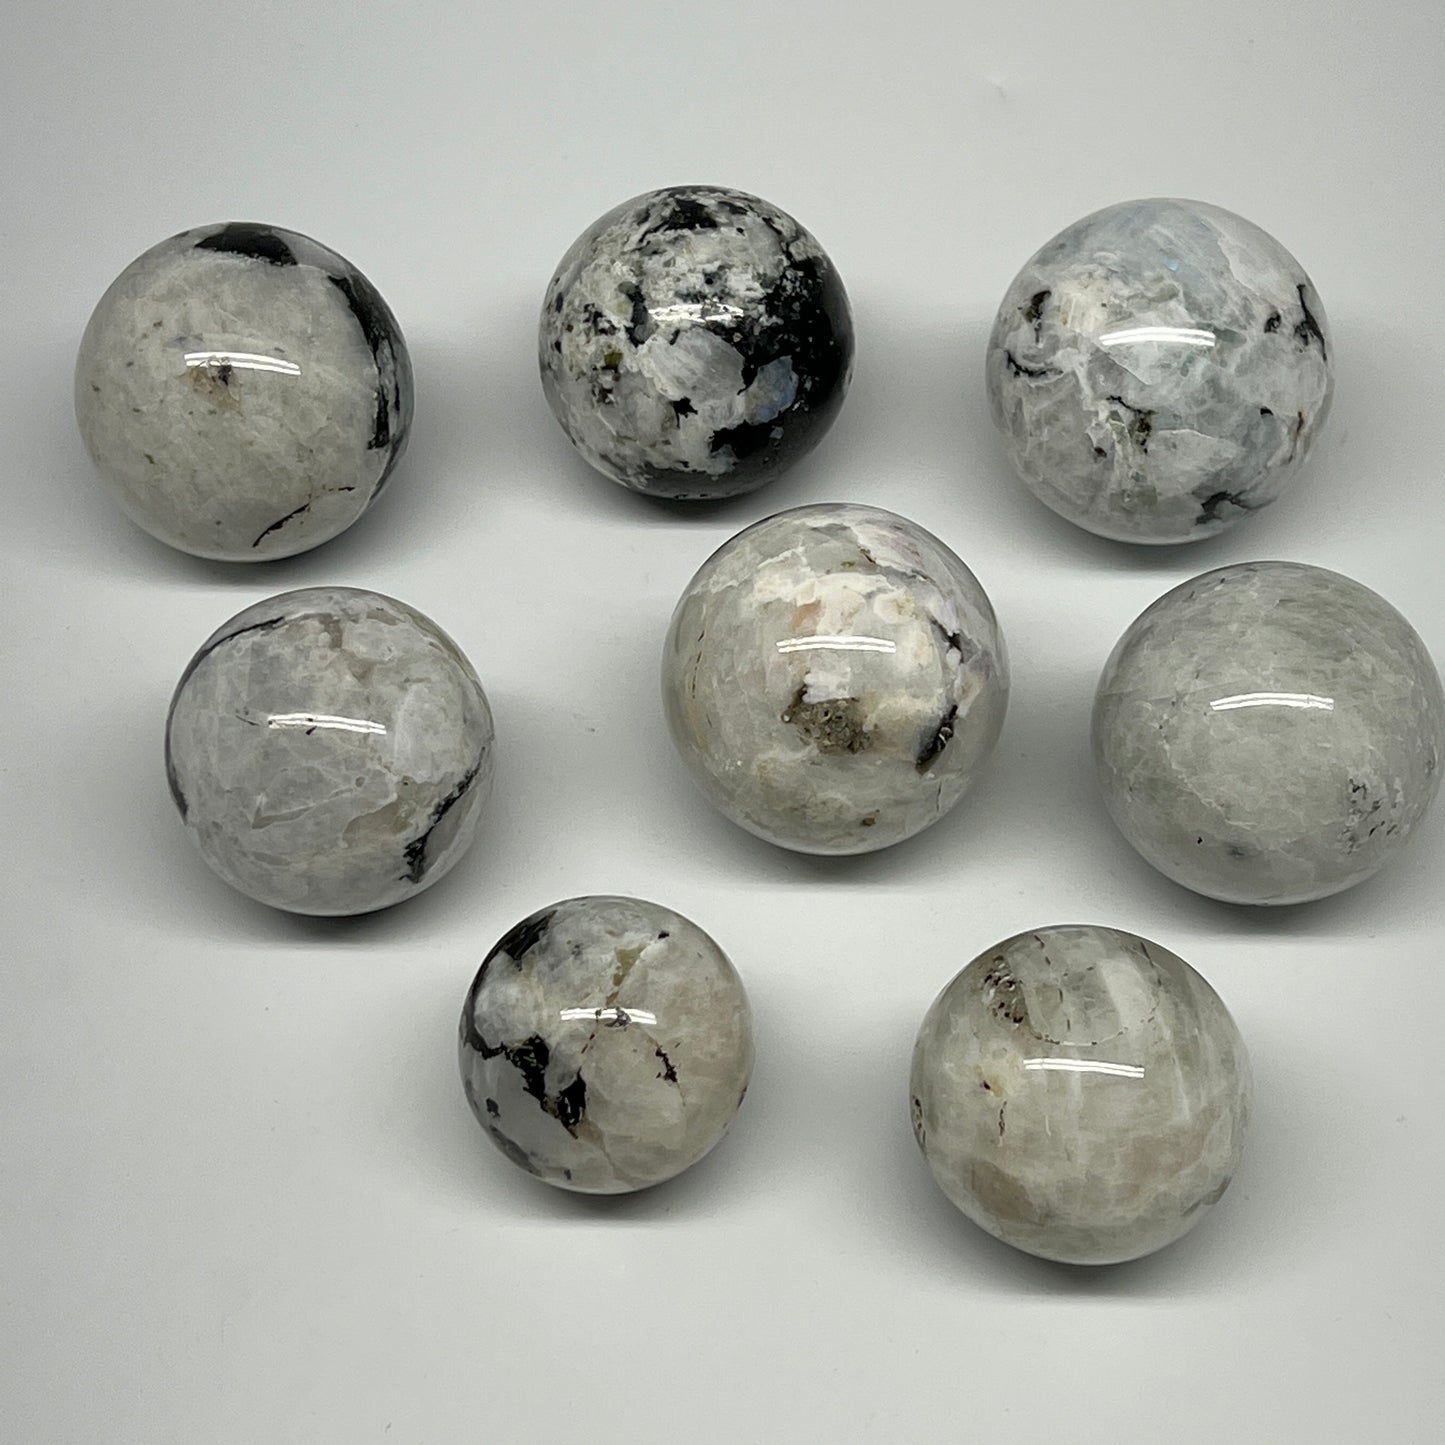 1050g, 1.5" - 2", 8pcs, Rainbow Moonstone Spheres Gemstones @India, B21424